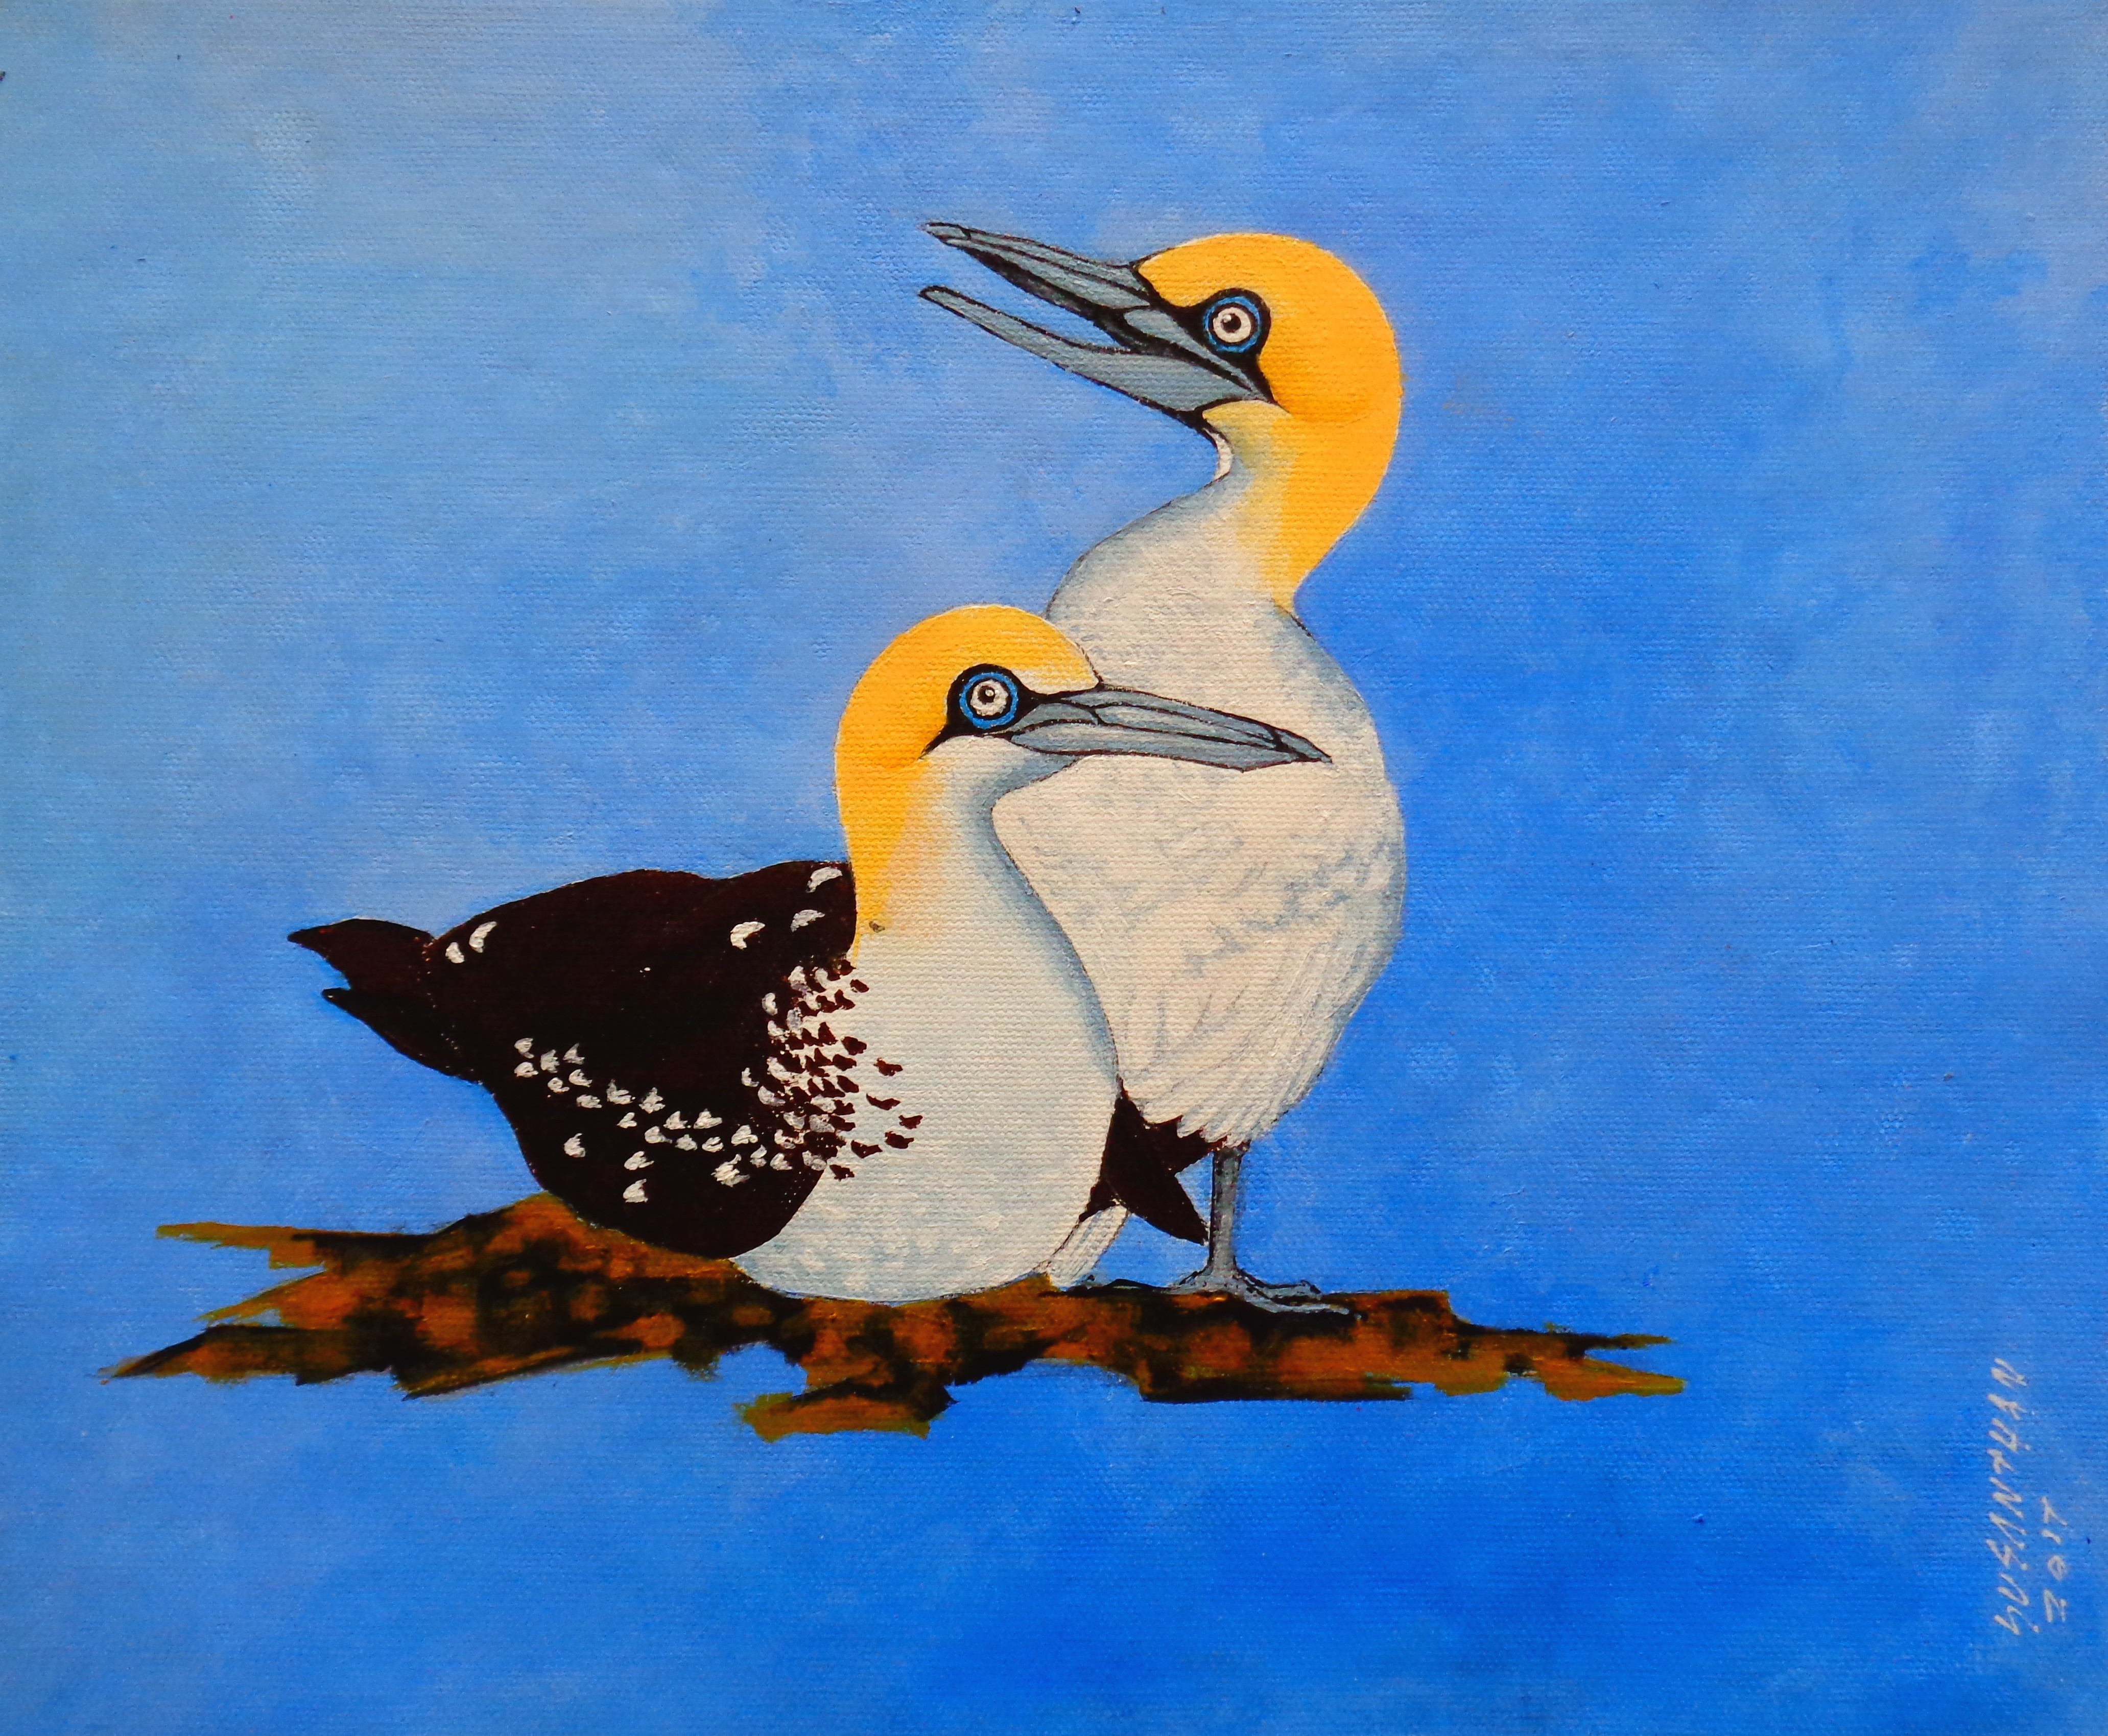 Two Gannet Birds by Susanthan Sinnathurai